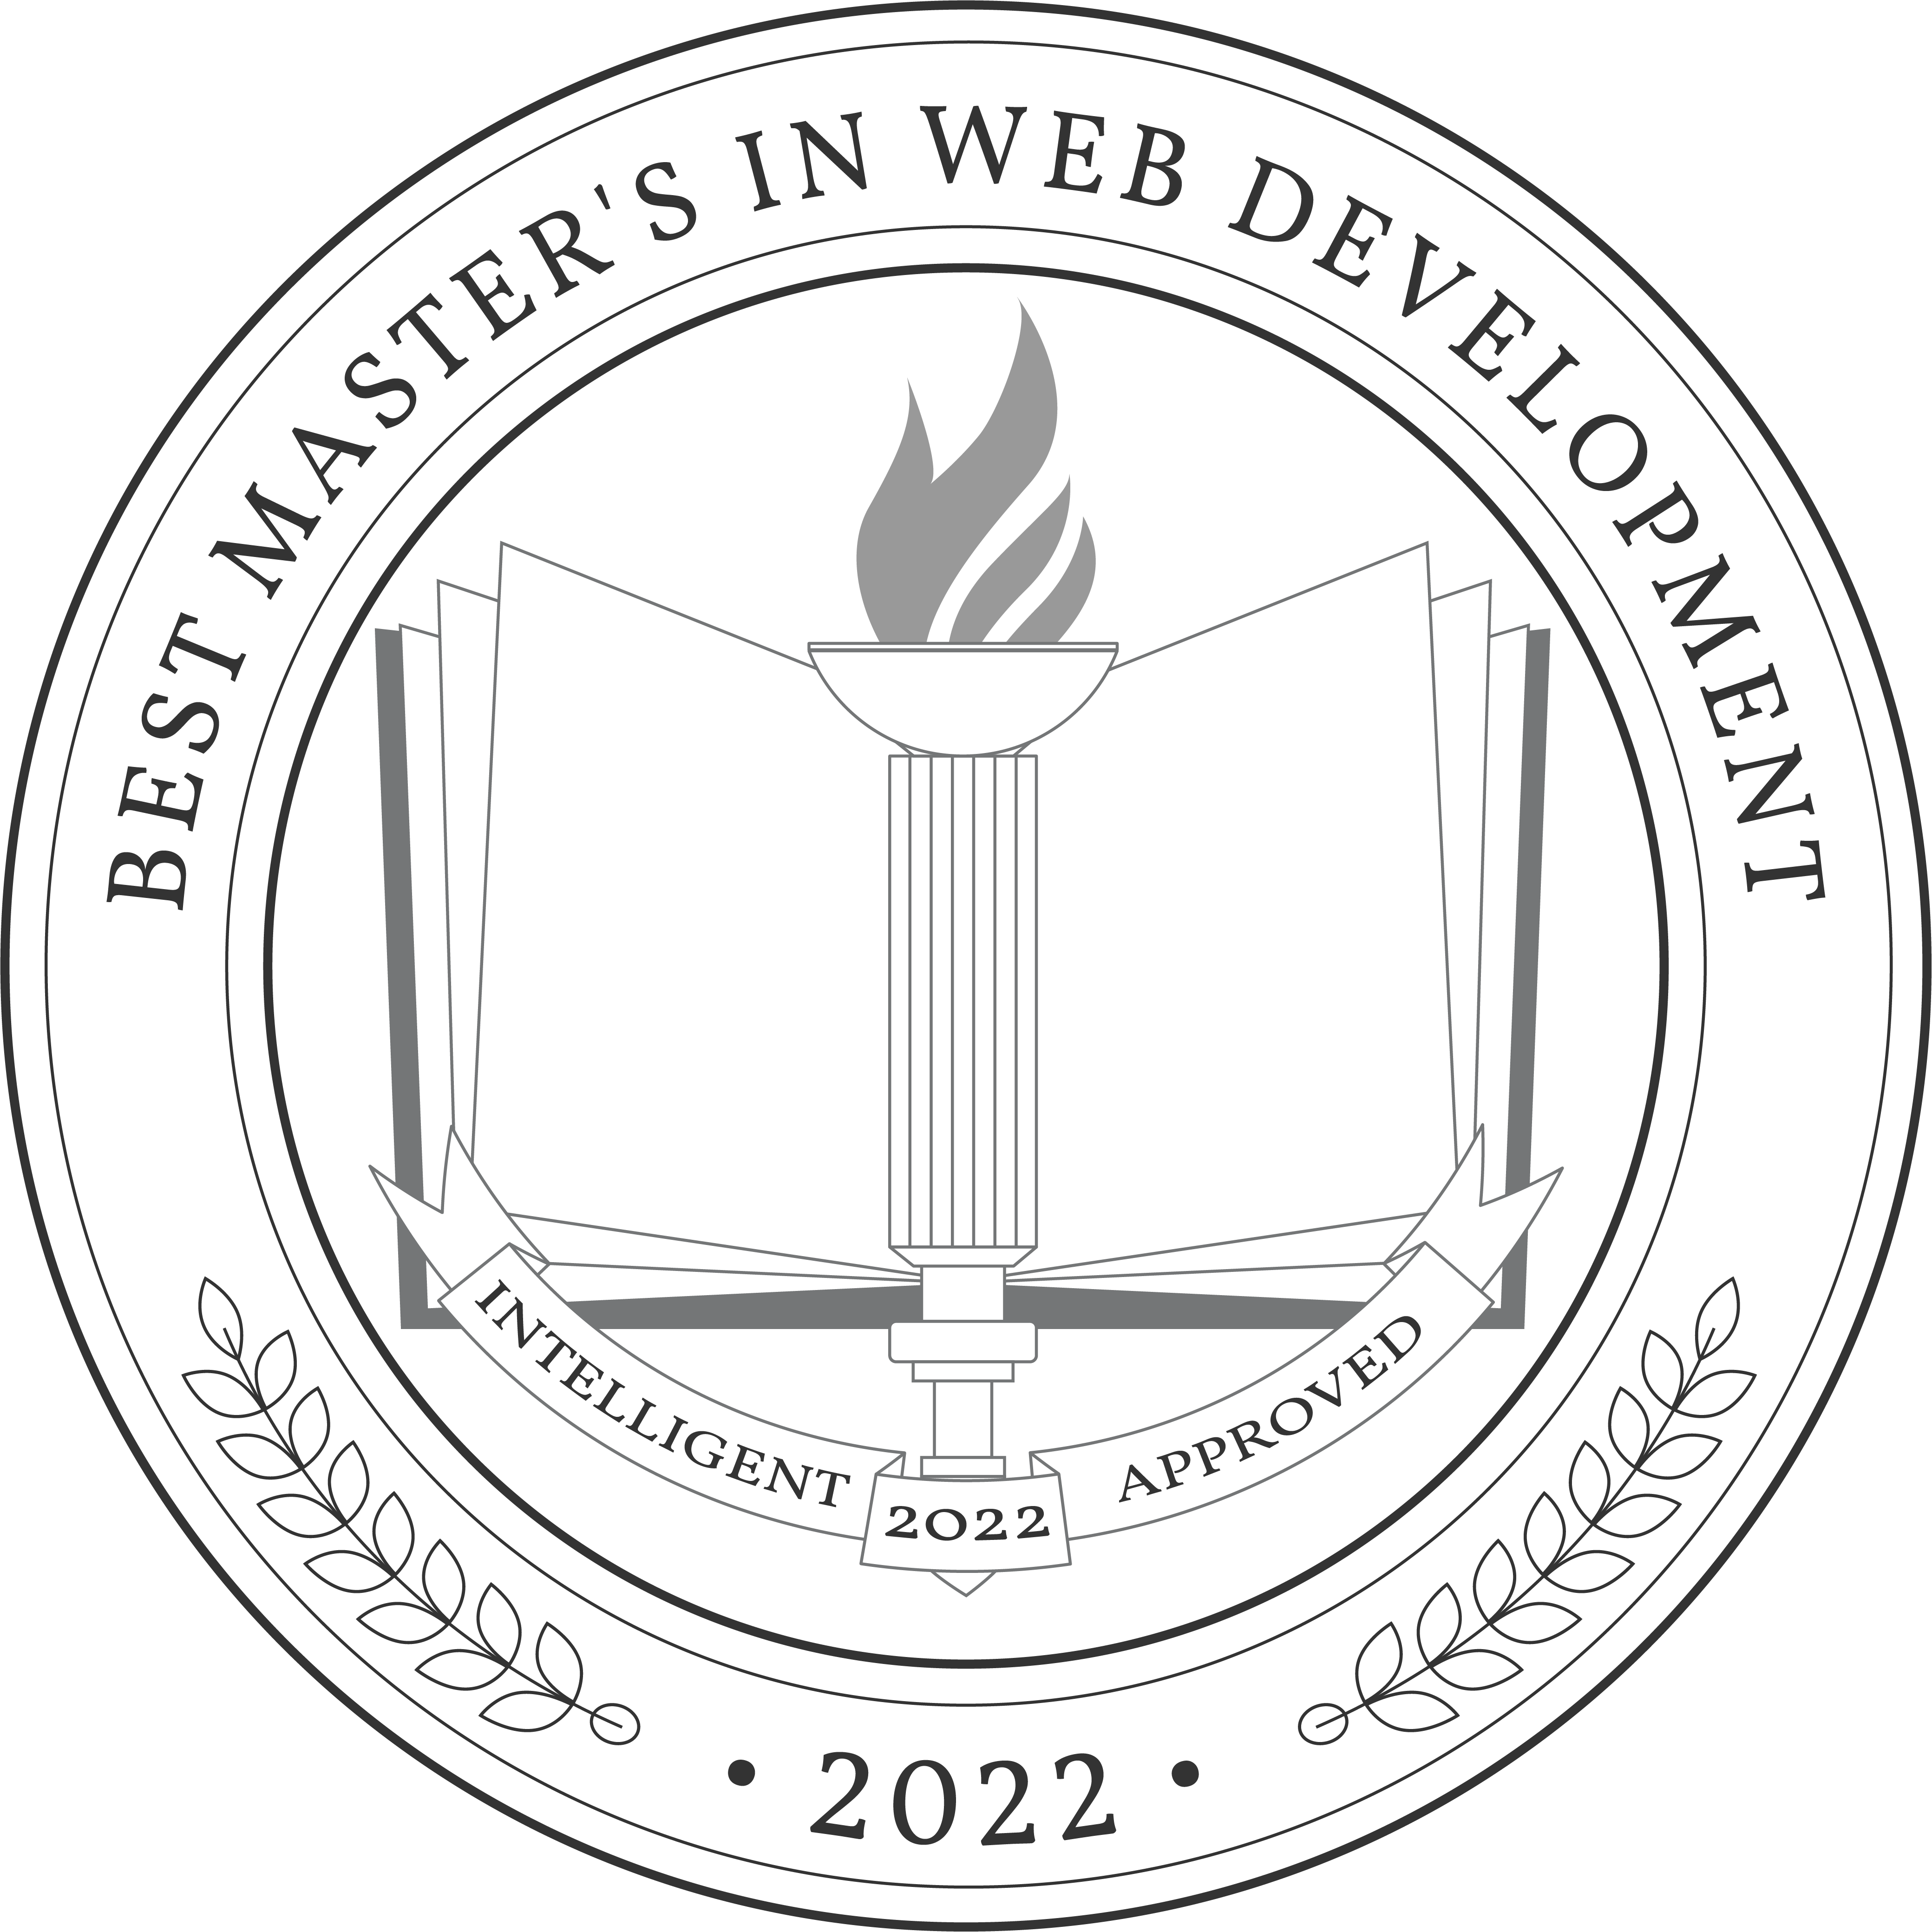 Best Master's in Web Development Badge